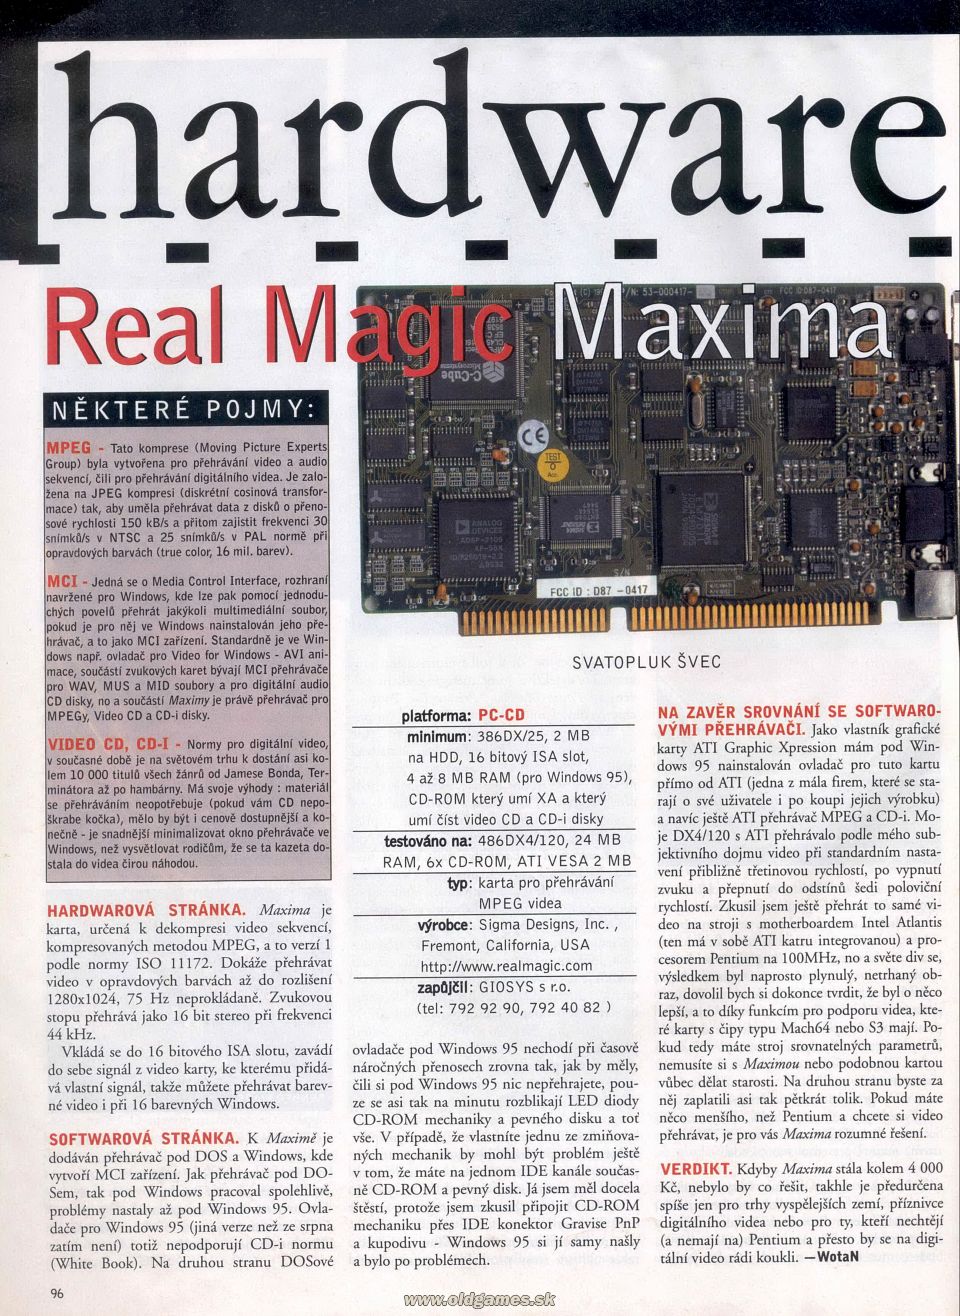 Hardware: Real Magic Maxima